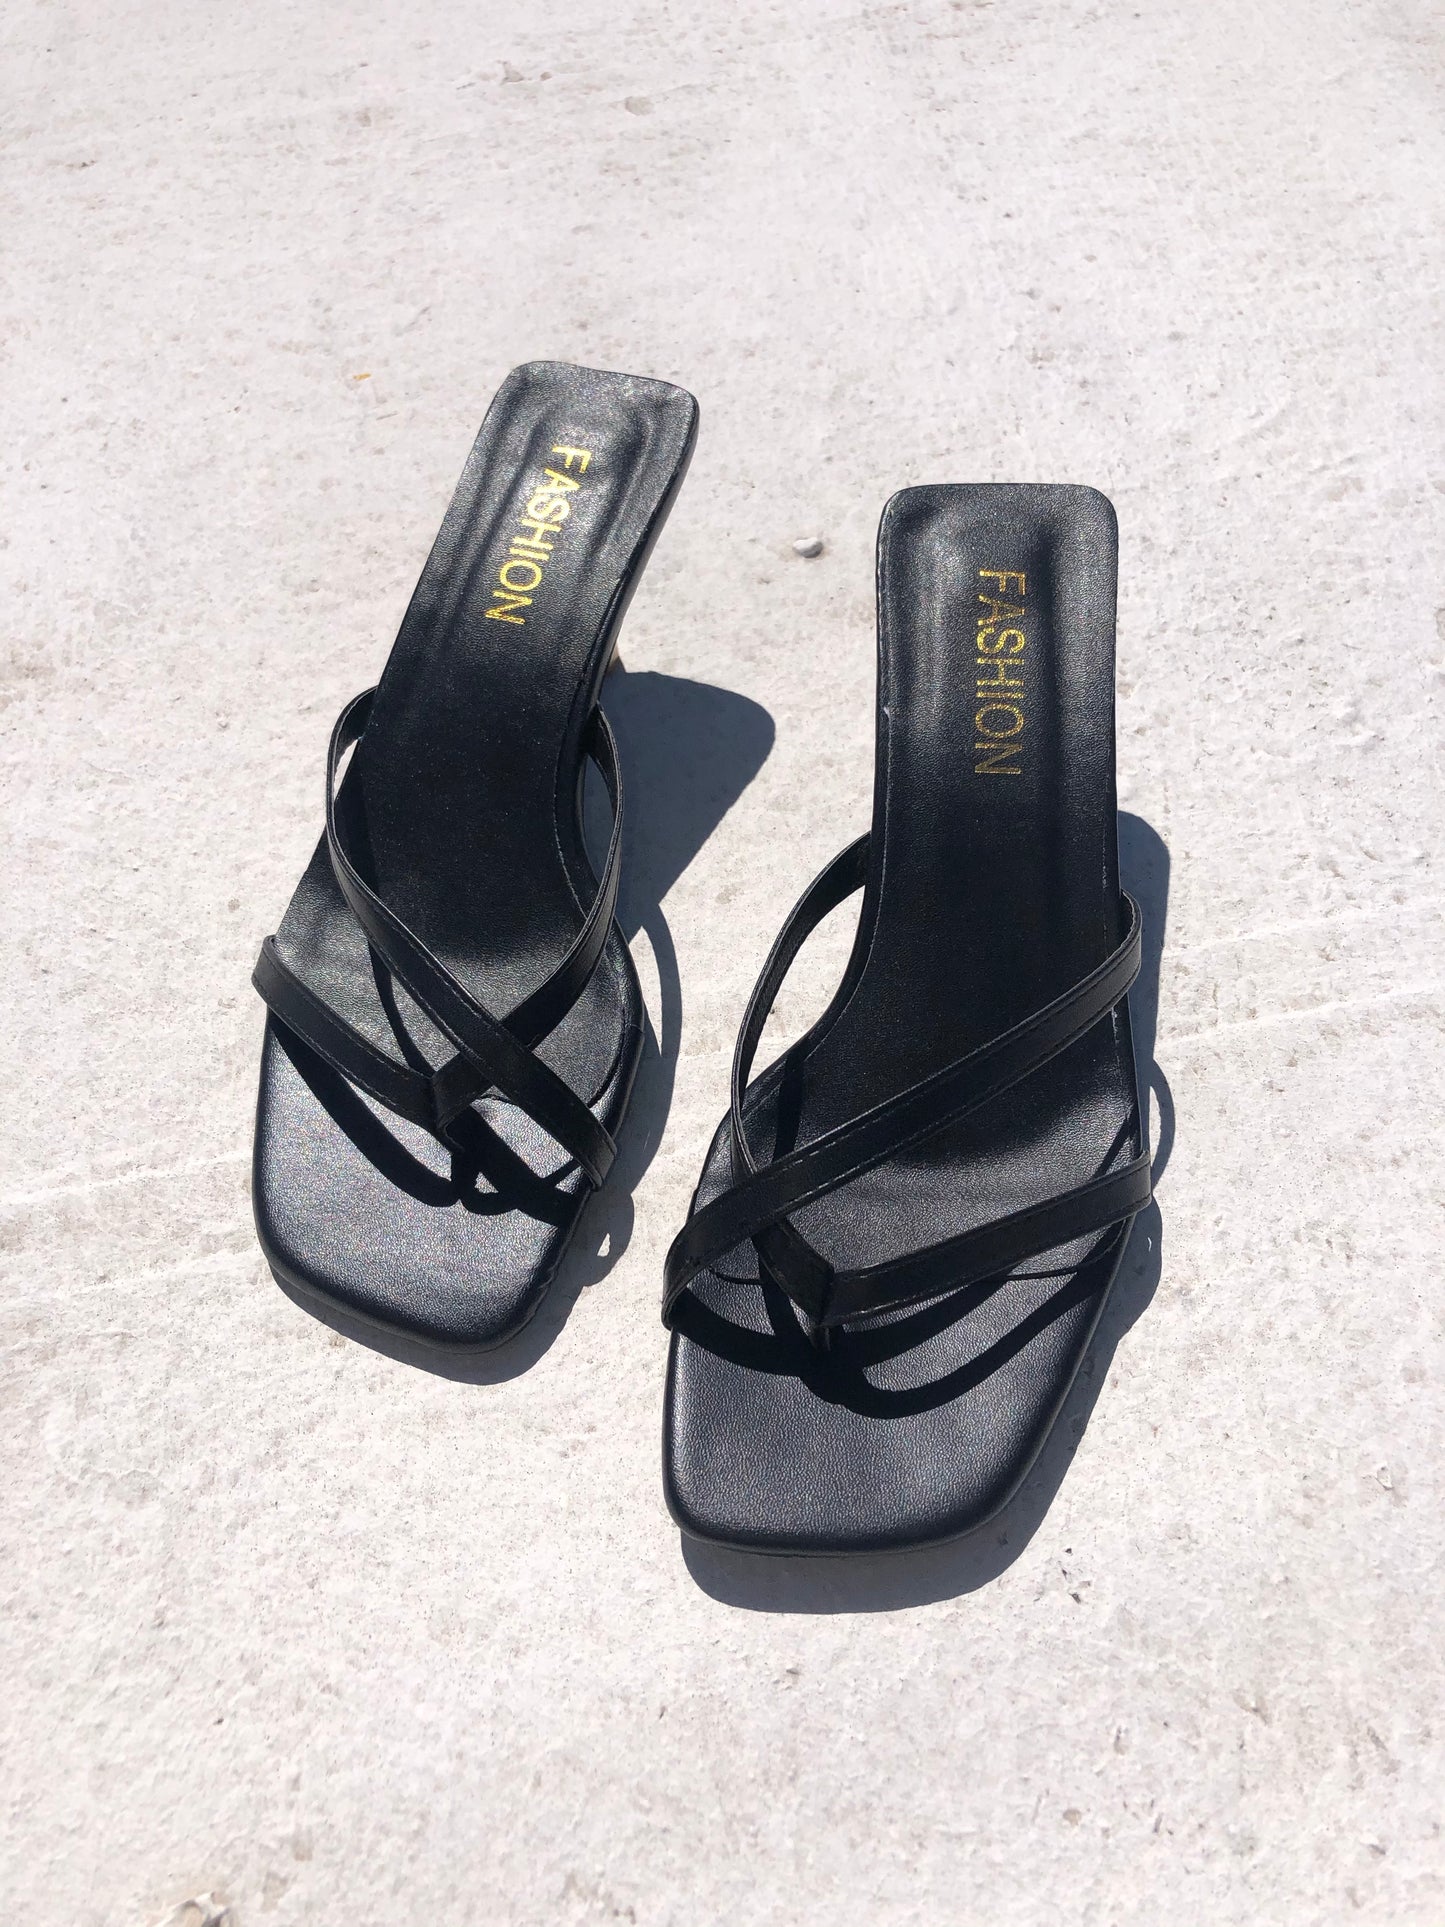 Toe Strap Sandals / 7.5